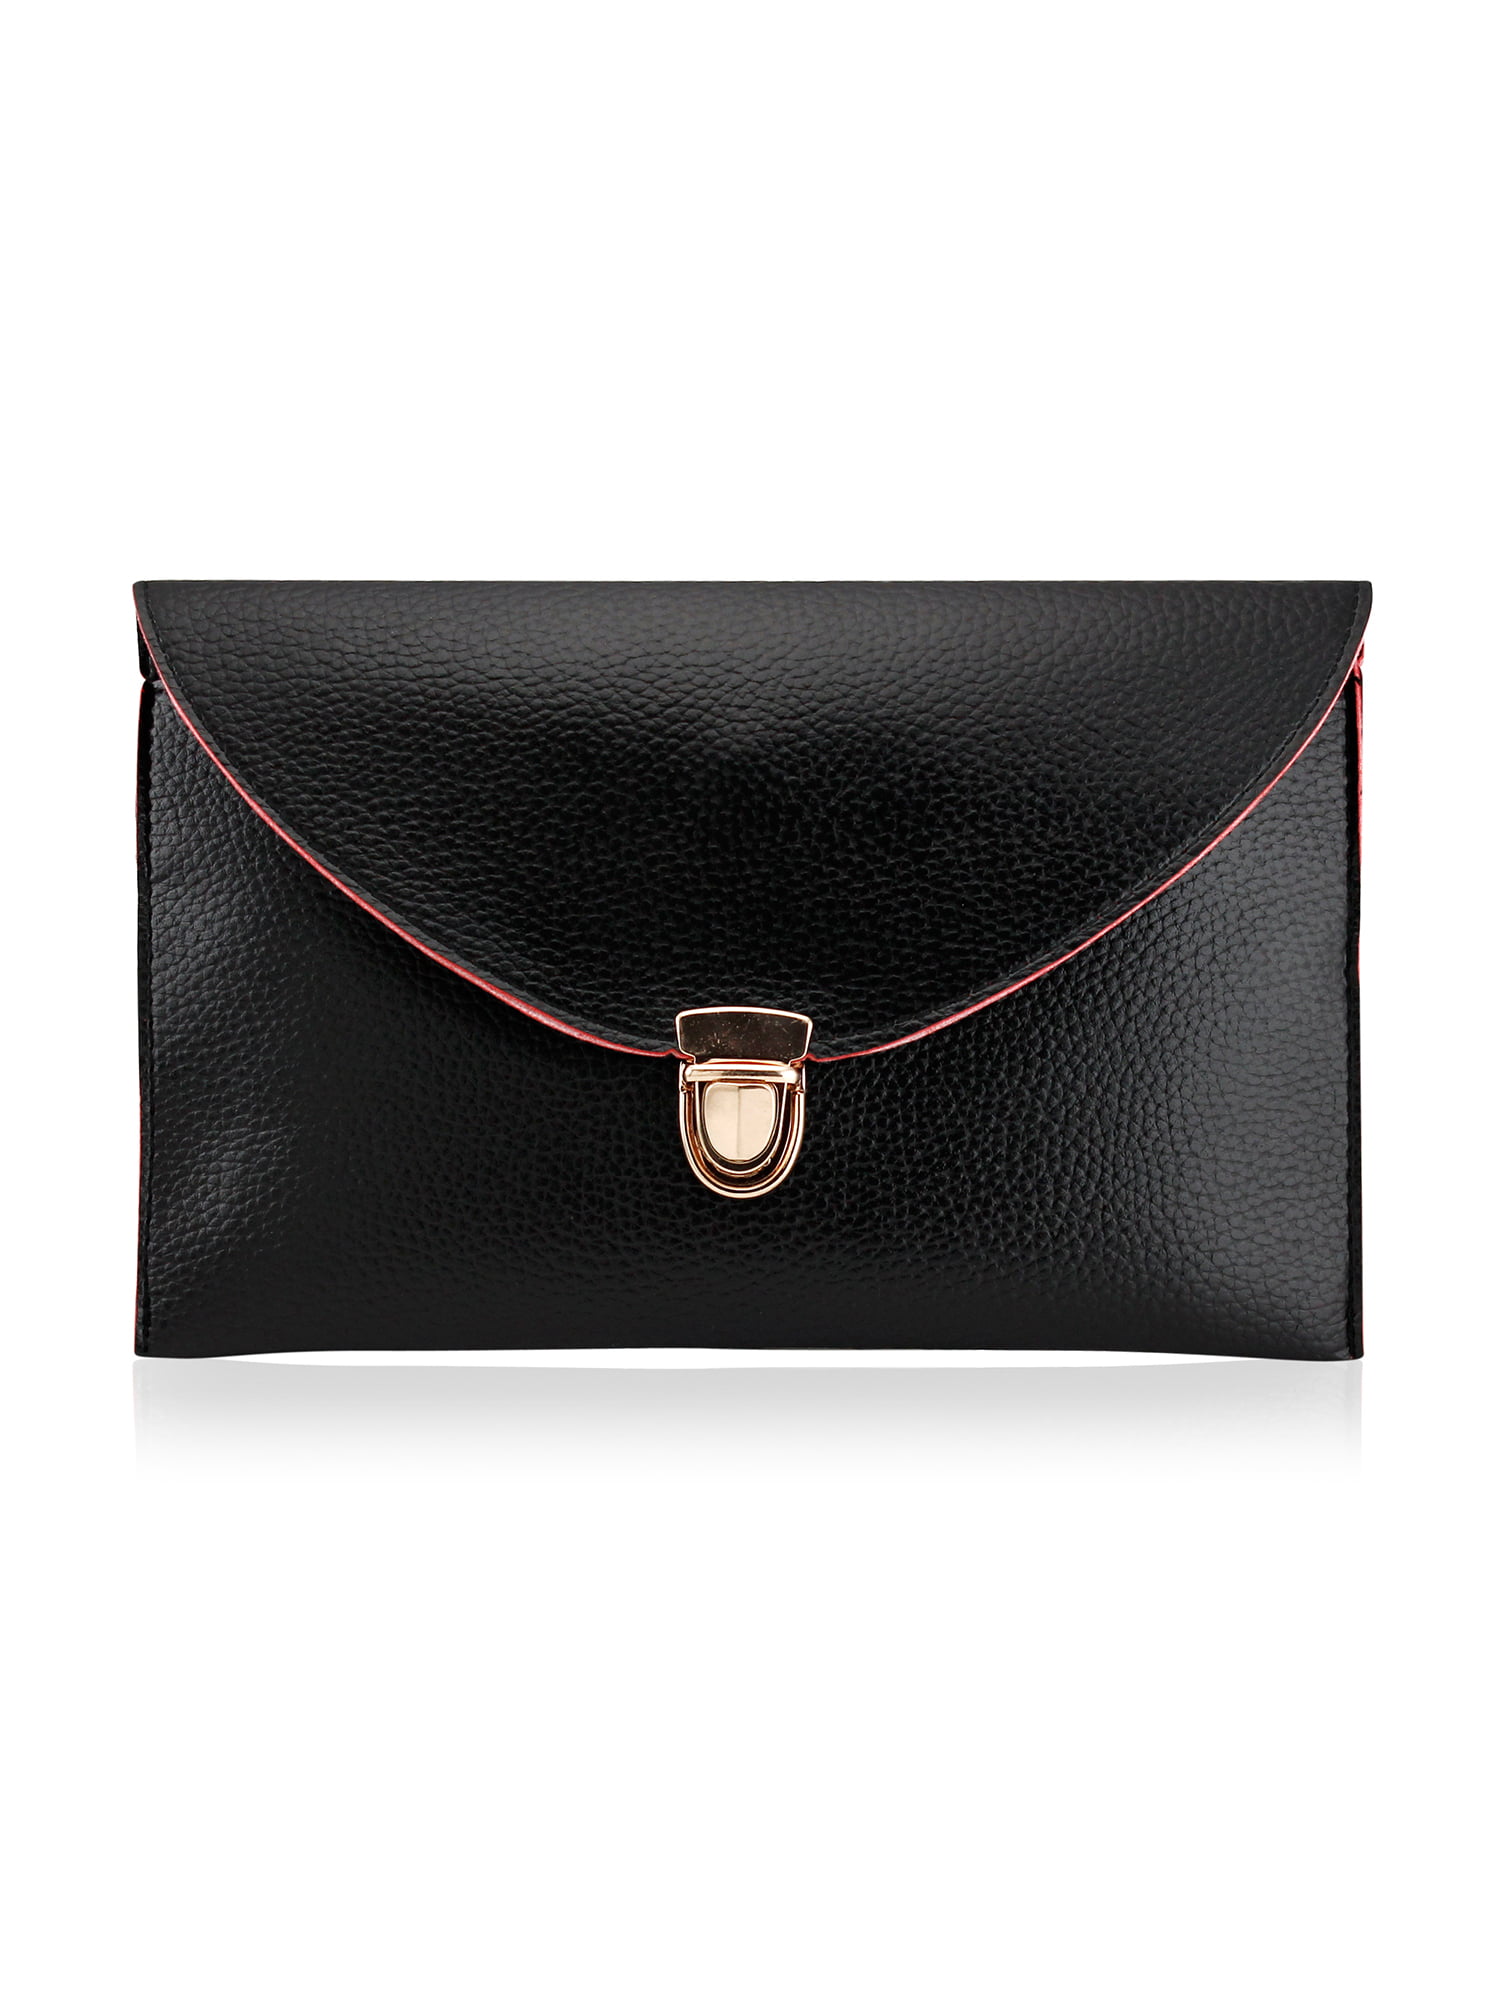 Leather Envelope Bag - Black - BAGS | Malina